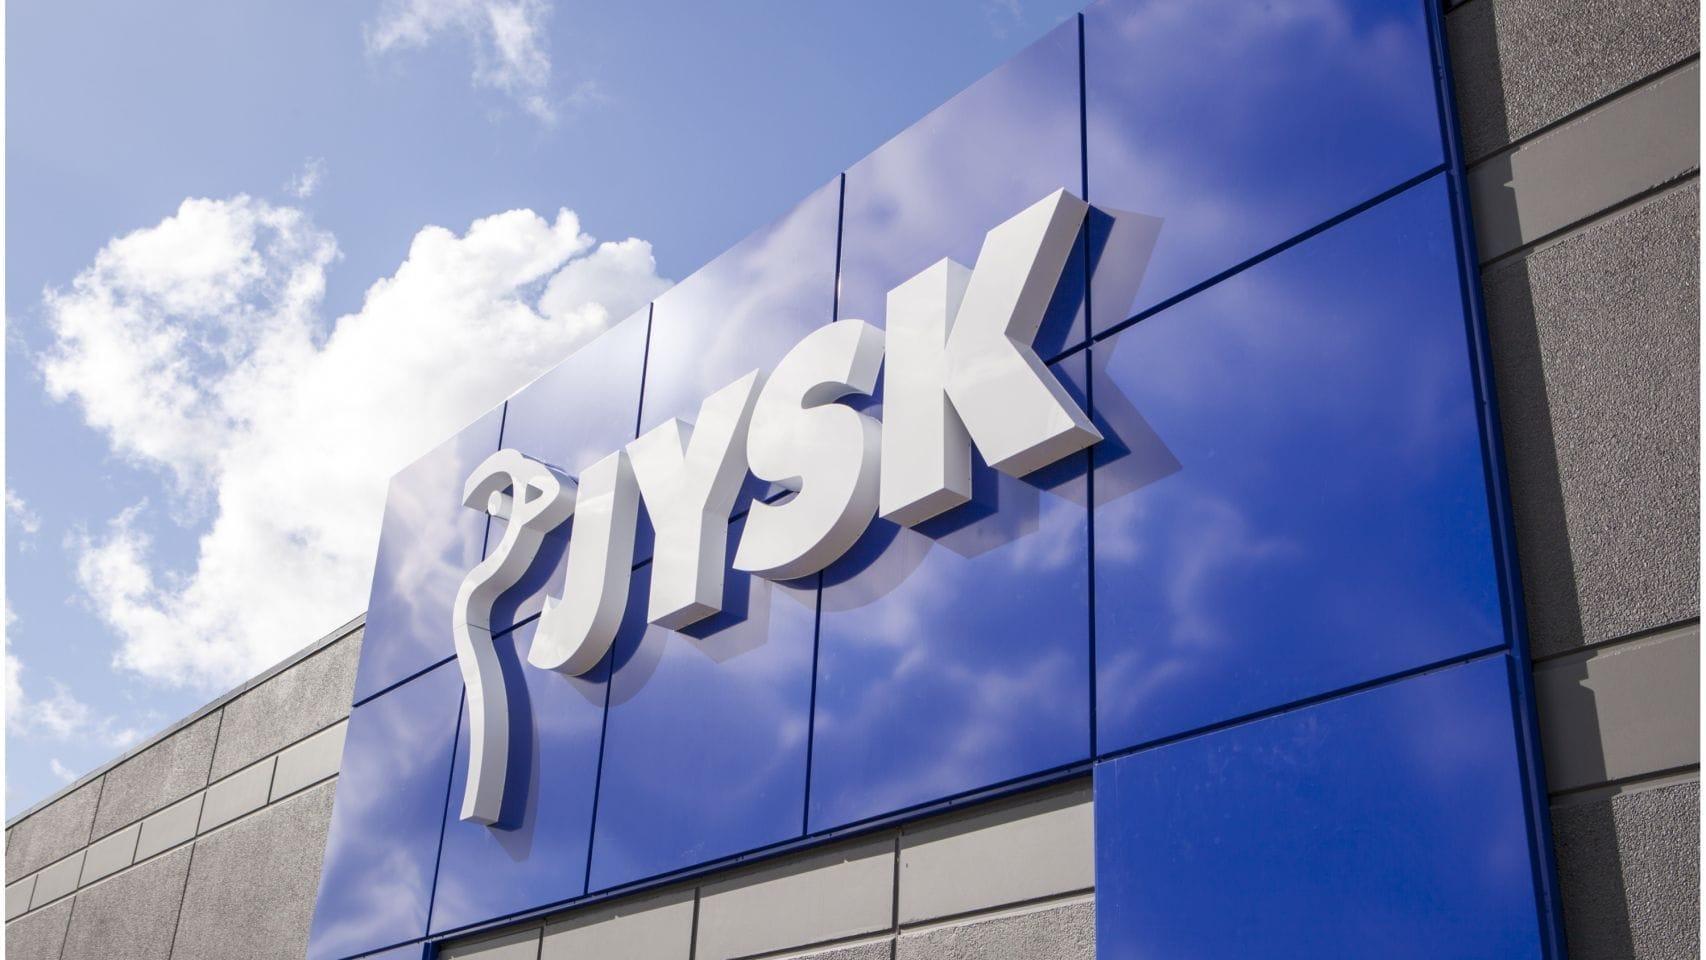 La apertura en Ferrol del IKEA danés JYSK se retrasa hasta el último trimestre del año